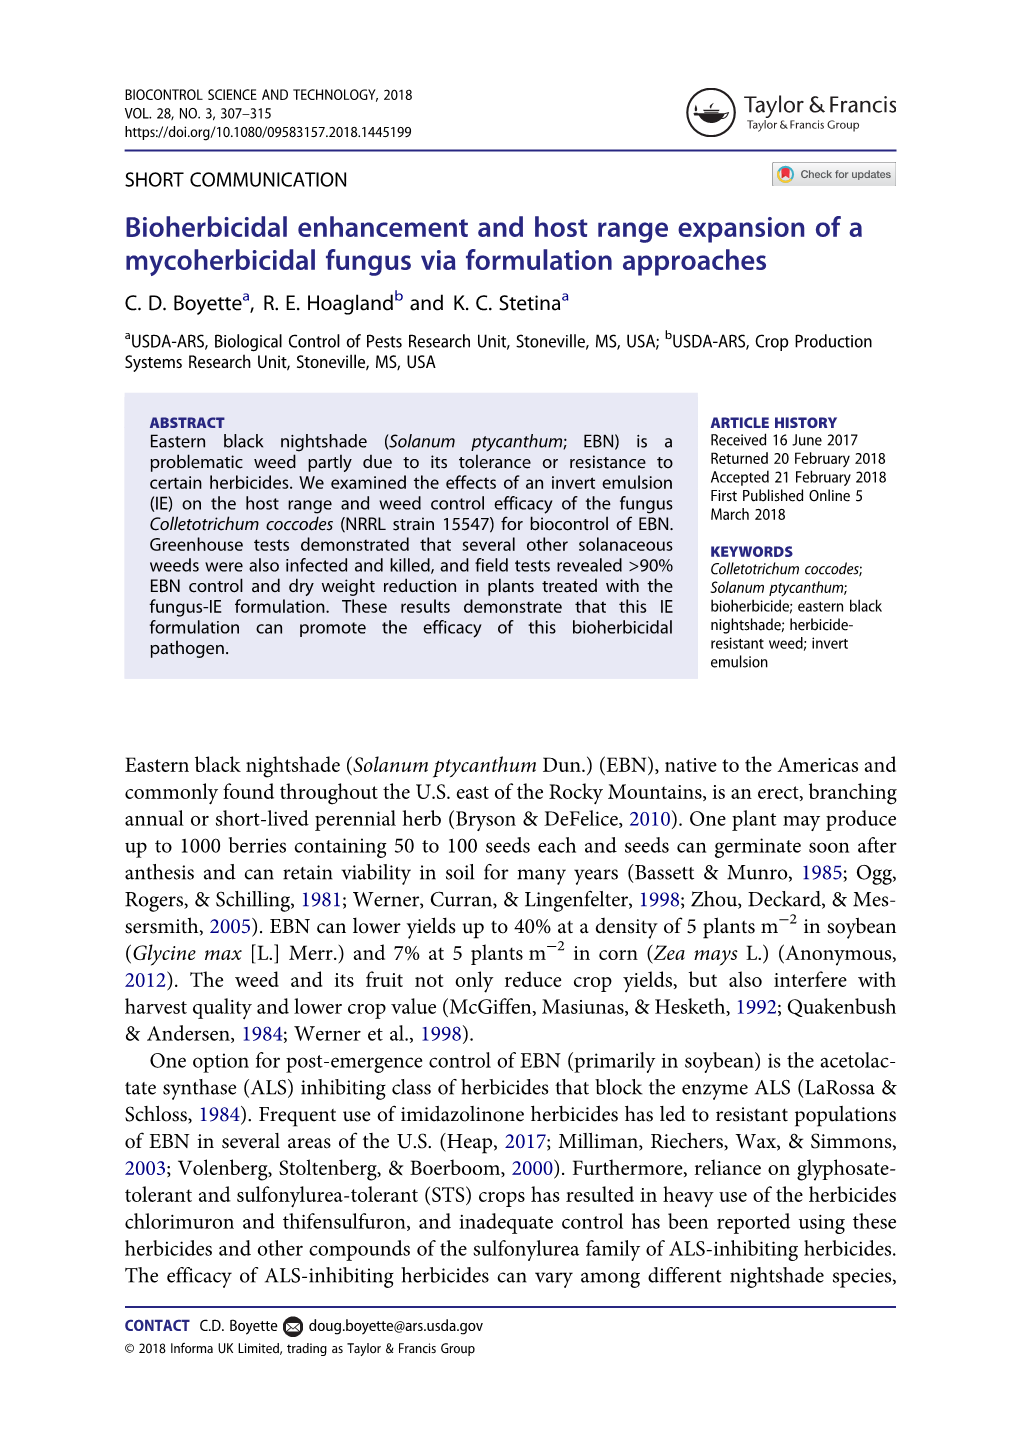 Bioherbicidal Enhancement and Host Range Expansion of a Mycoherbicidal Fungus Via Formulation Approaches C